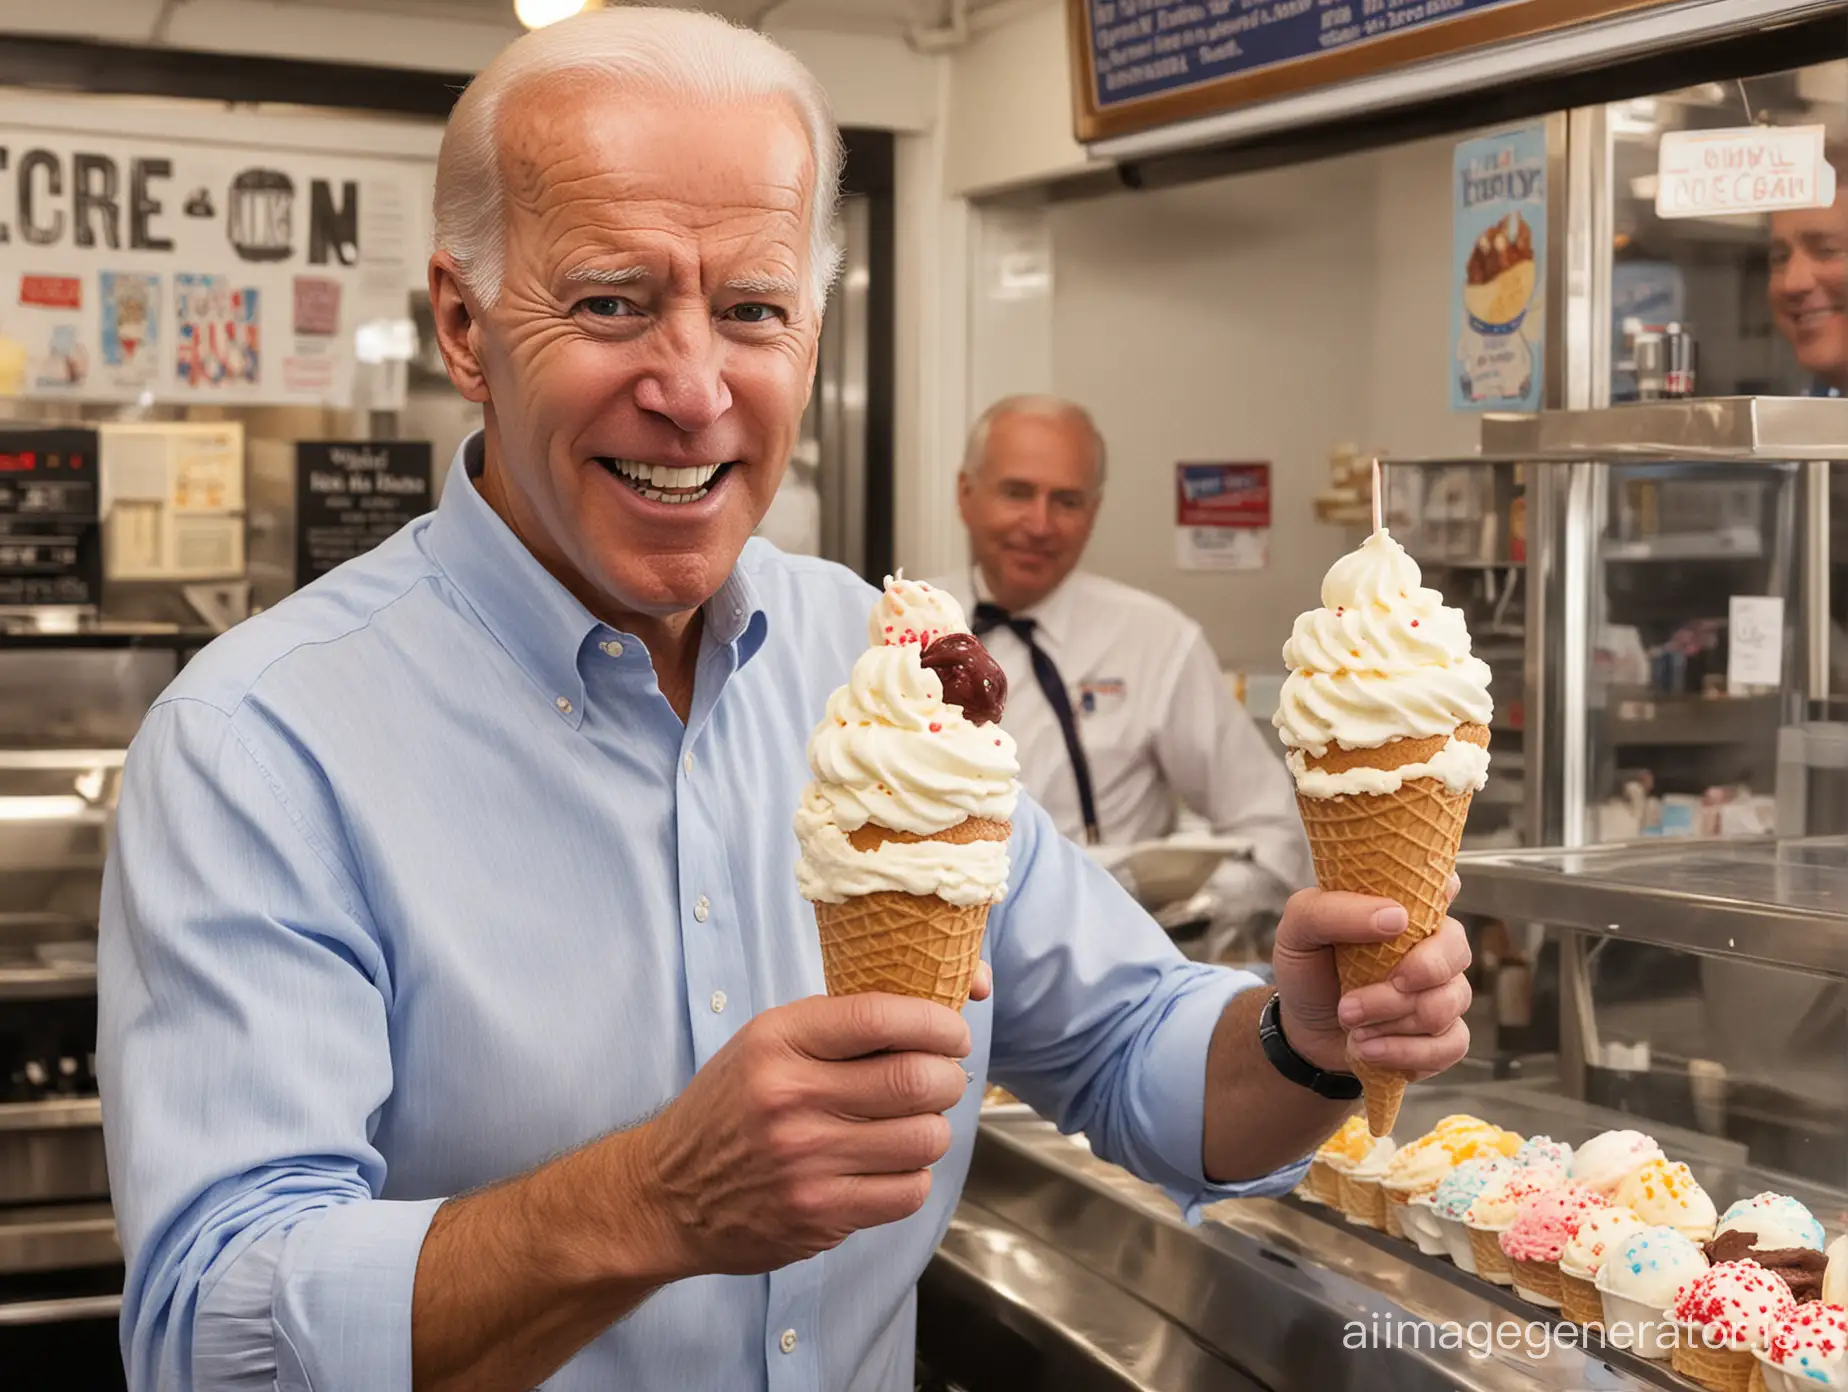 Joe-Biden-Running-a-Charming-Ice-Cream-Parlor-with-Presidential-Flair